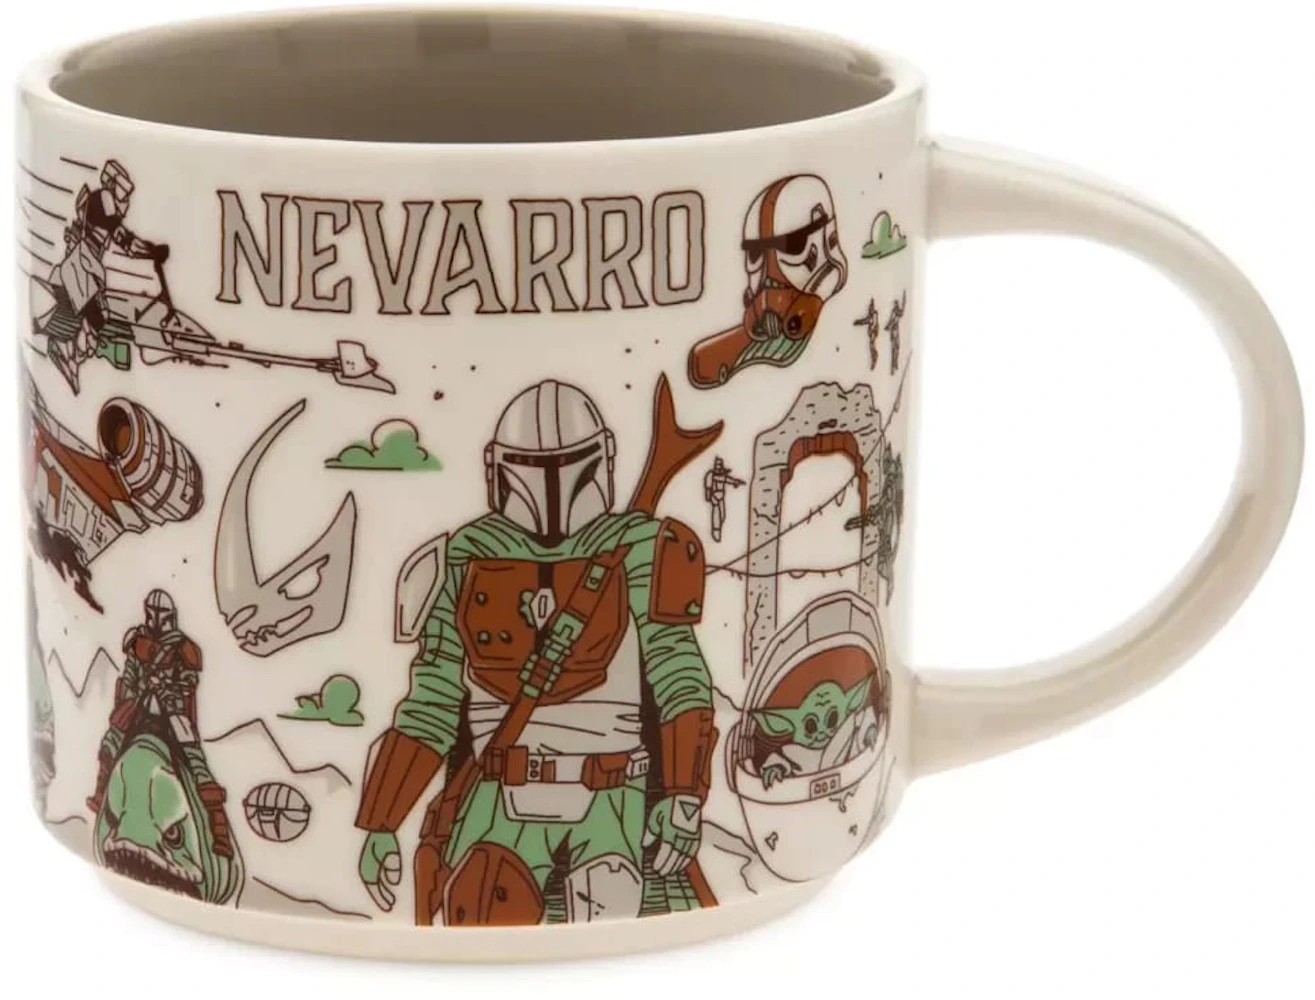 https://images.stockx.com/images/Starbucks-Star-Wars-Collection-Nevarro-Mug.jpg?fit=fill&bg=FFFFFF&w=700&h=500&fm=webp&auto=compress&q=90&dpr=2&trim=color&updated_at=1654191664